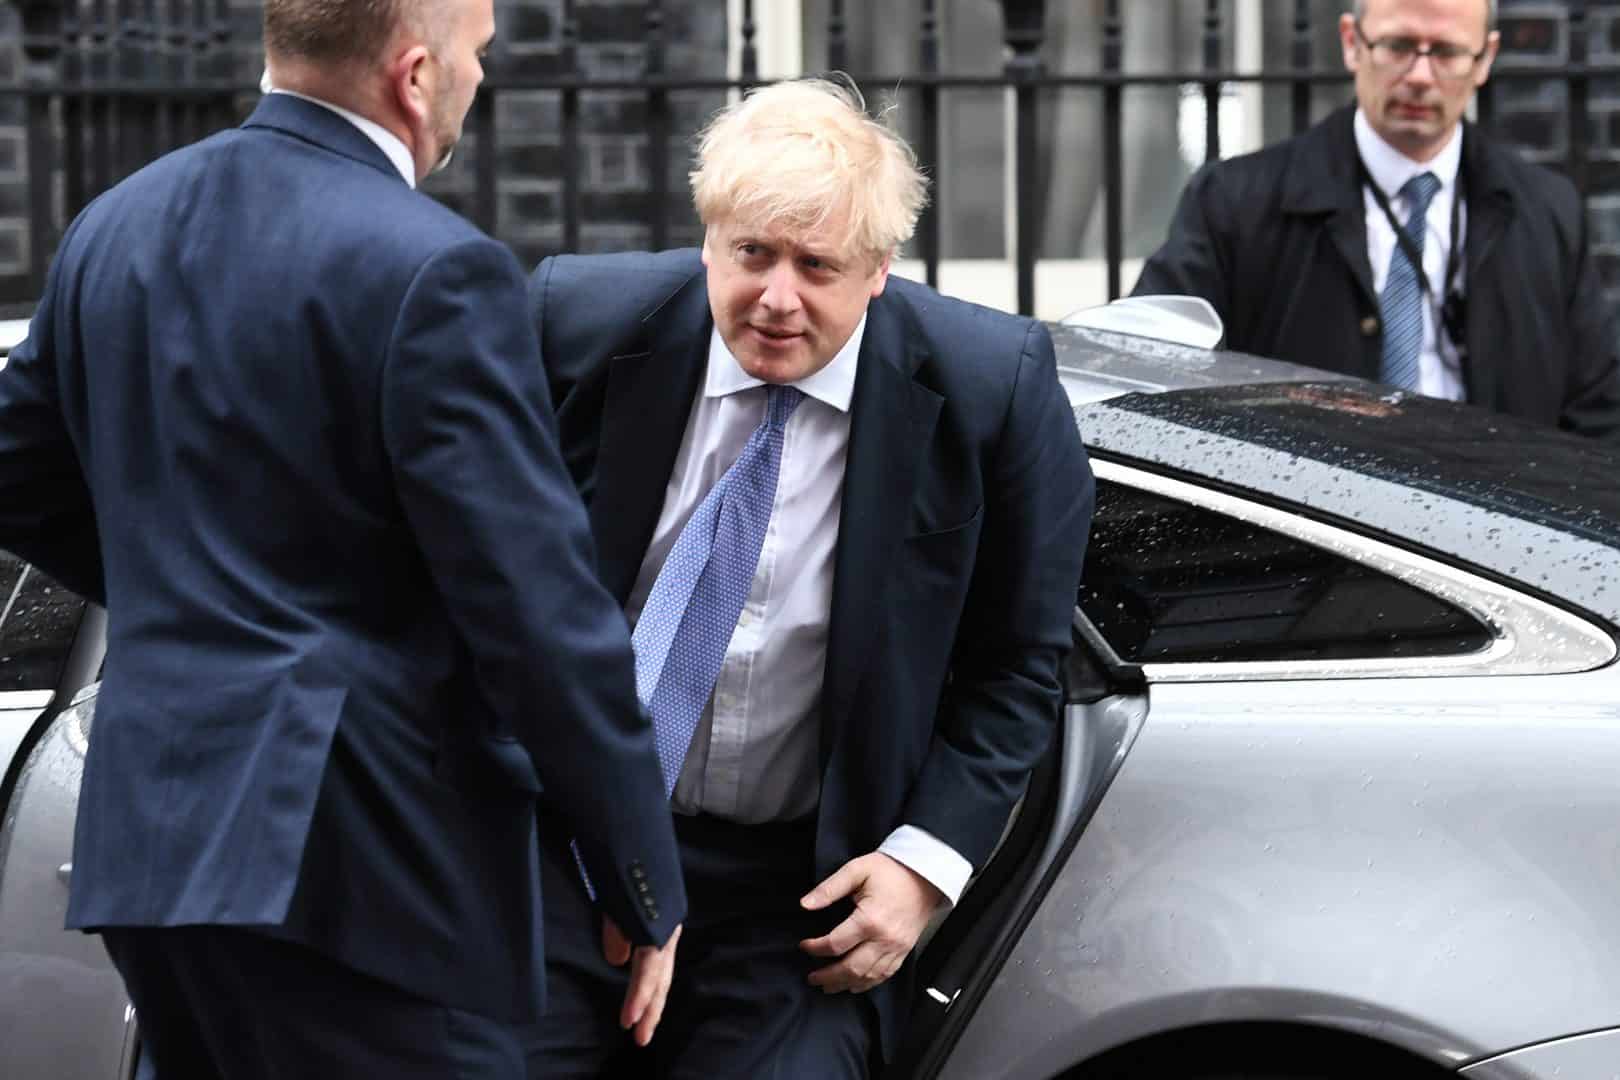 Boris Johnson faces calls to sack controversial Number 10 adviser